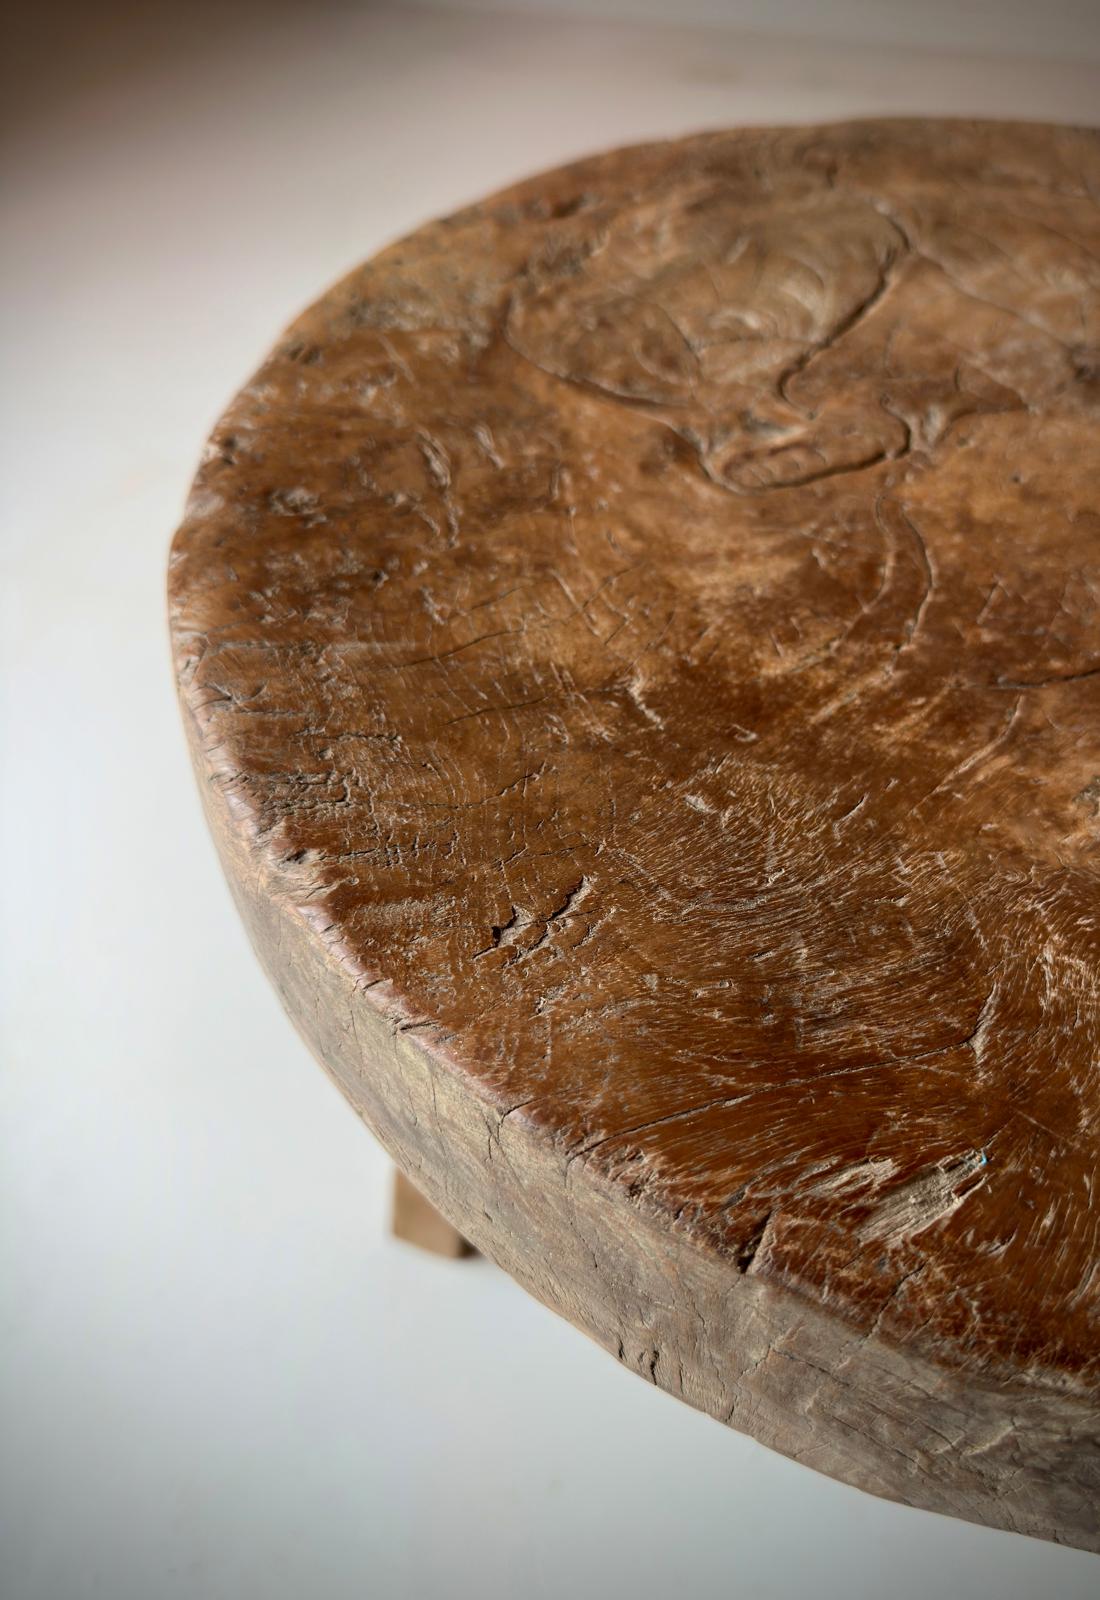 Ibuki unique finds: Wooden round teak stool